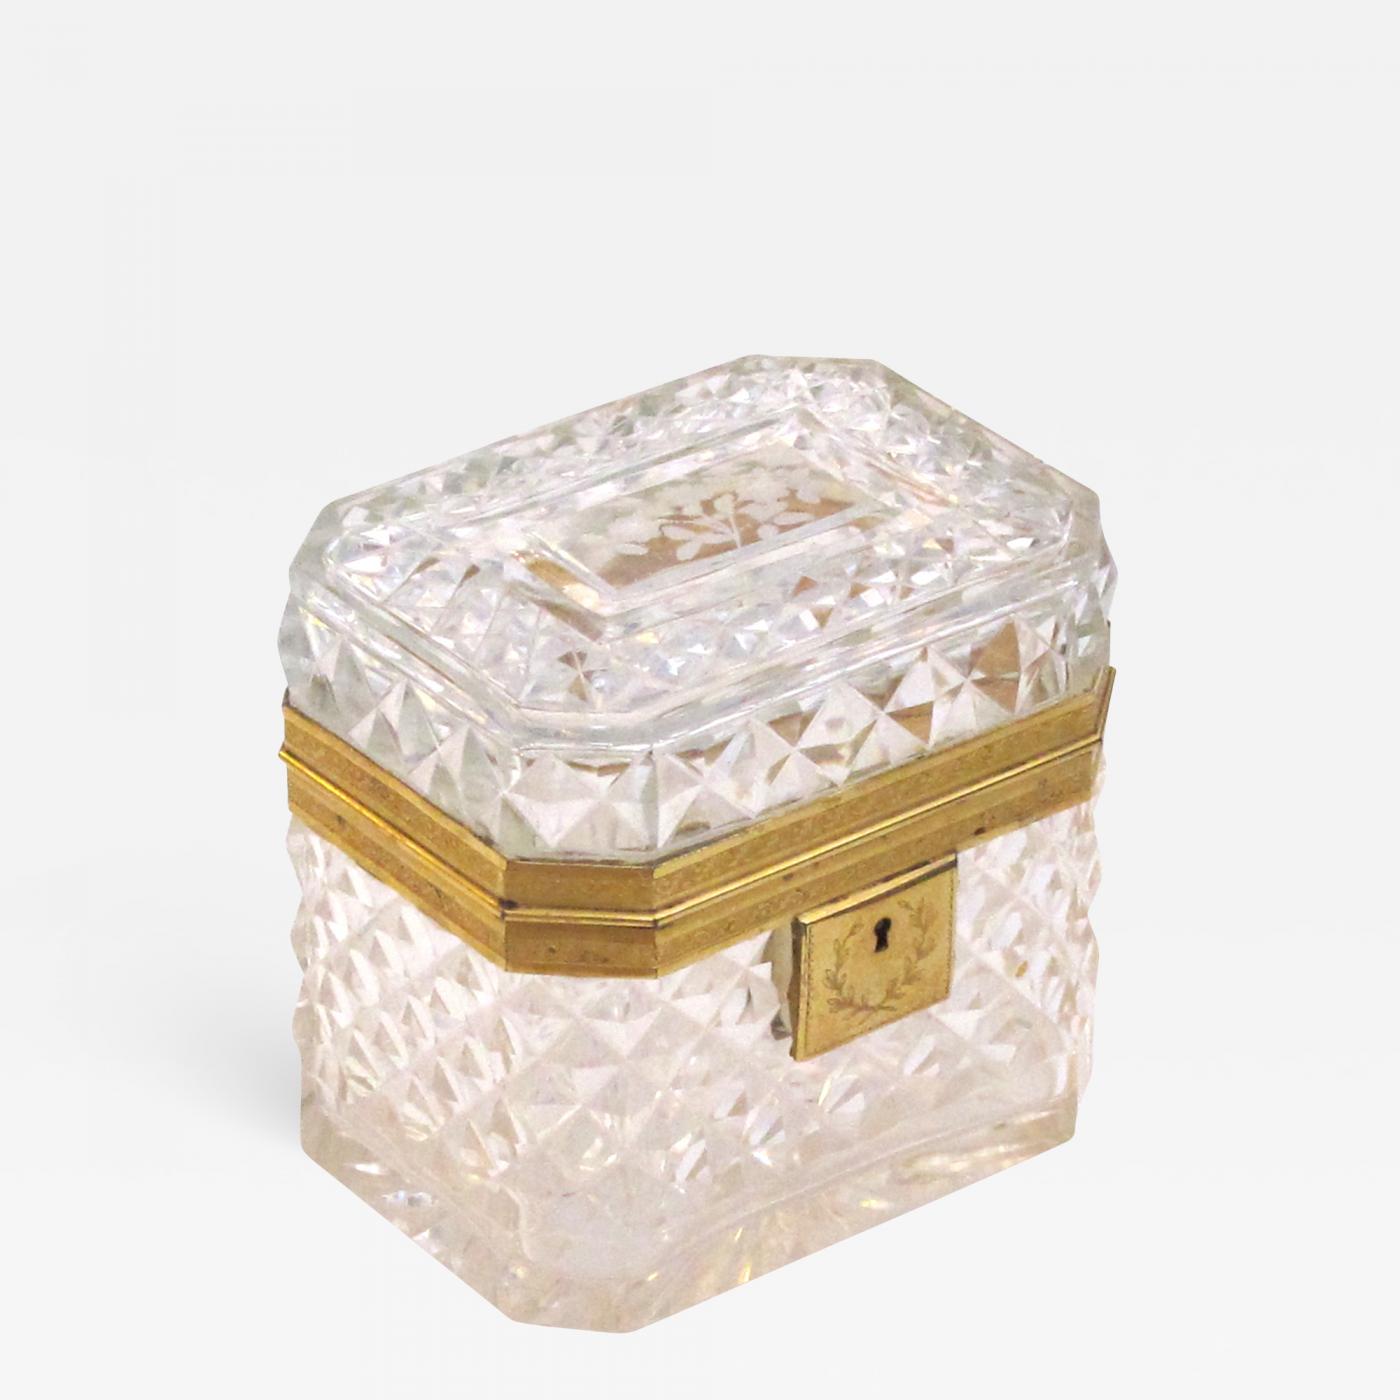 Baccarat - Exquisite antique Baccarat diamond-cut crystal vanity box